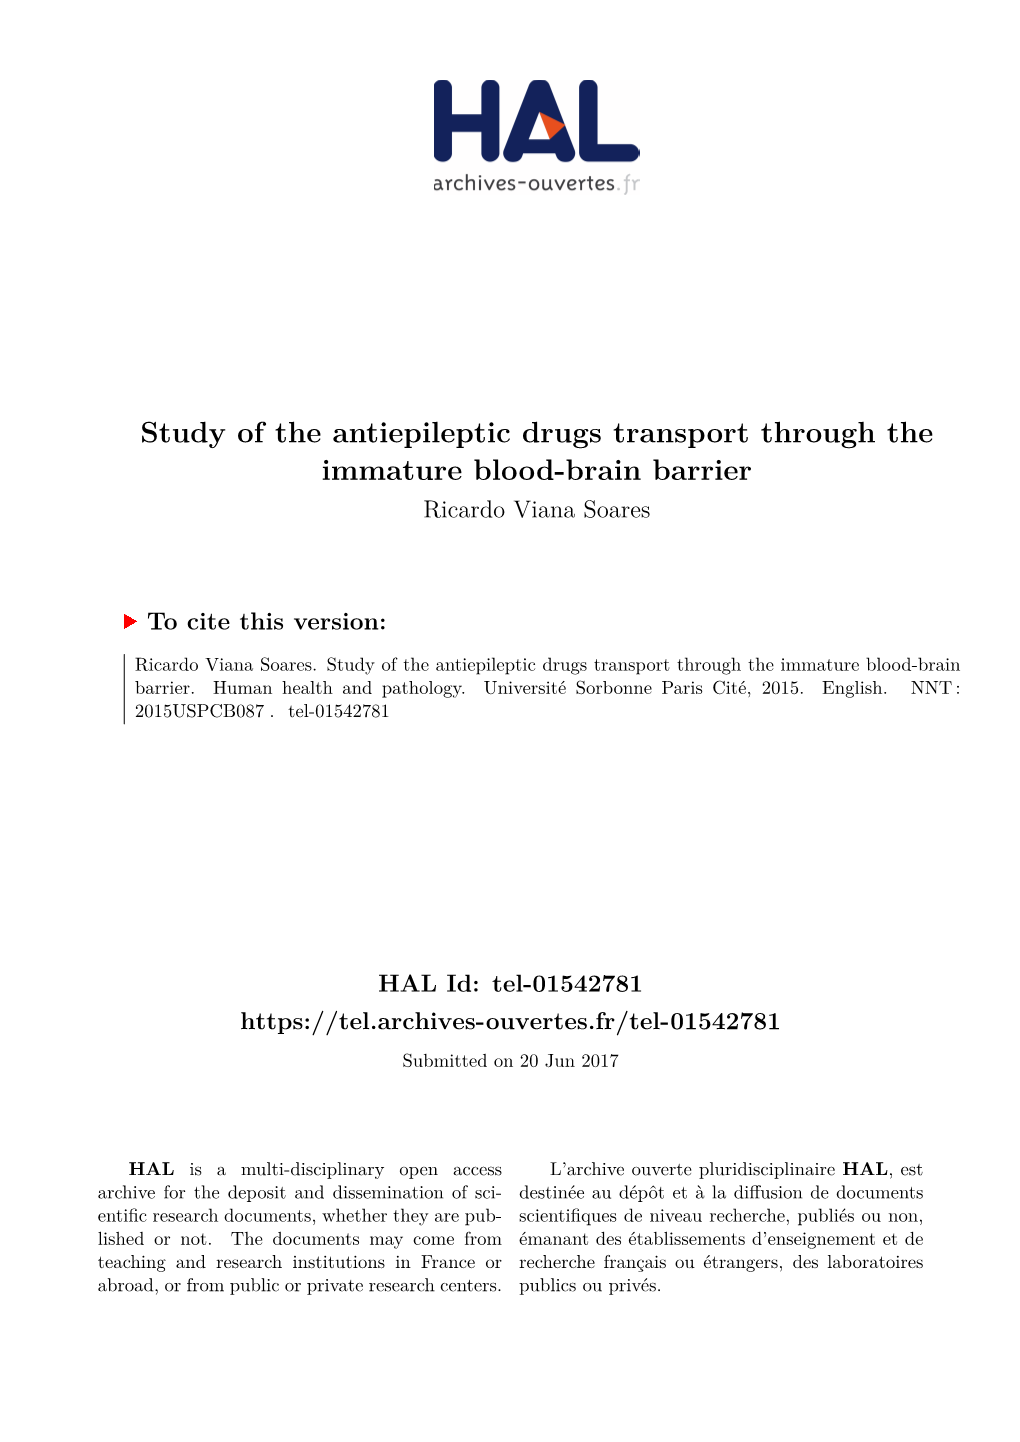 Study of the Antiepileptic Drugs Transport Through the Immature Blood-Brain Barrier Ricardo Viana Soares